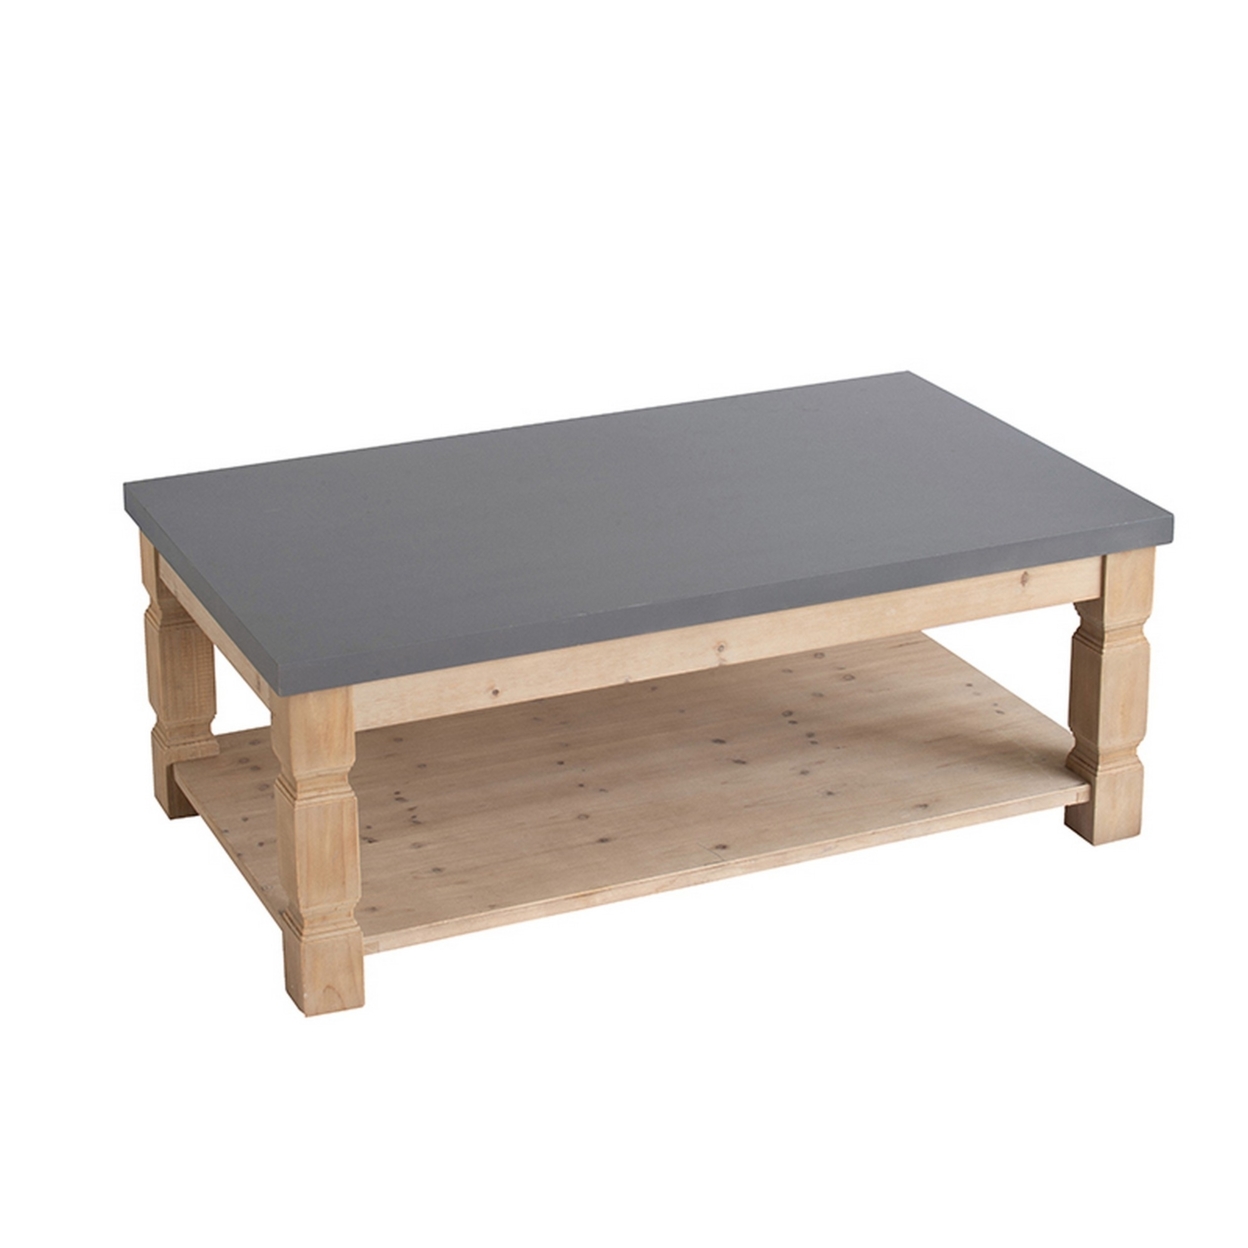 48 Inch Coffee Table, Rectangular, Concrete Top, Wood Frame, Rustic, Gray, Saltoro Sherpi